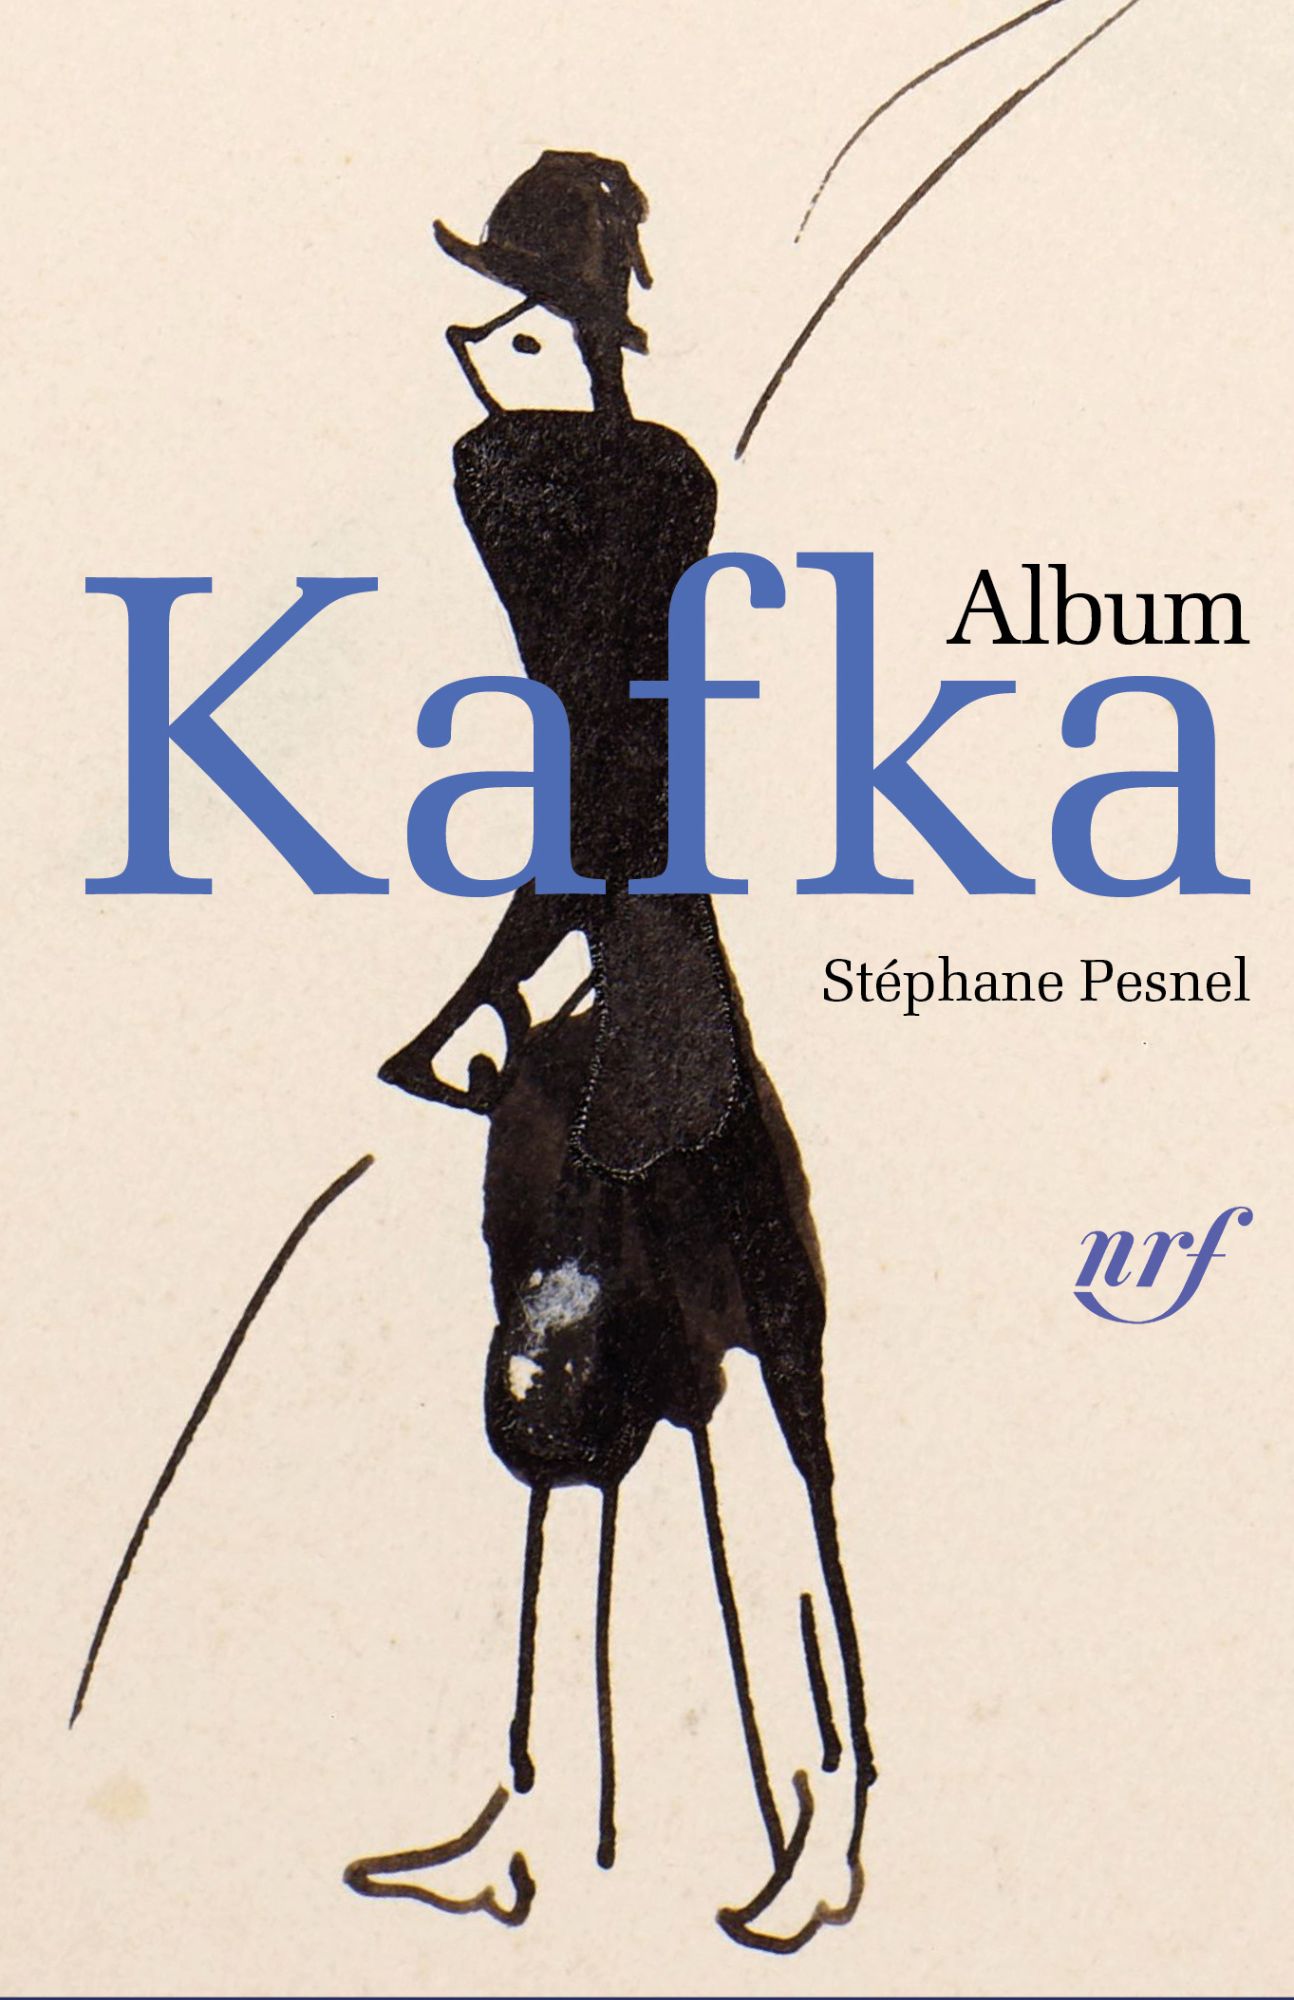 Stéphane Pesnel, Album Kafka